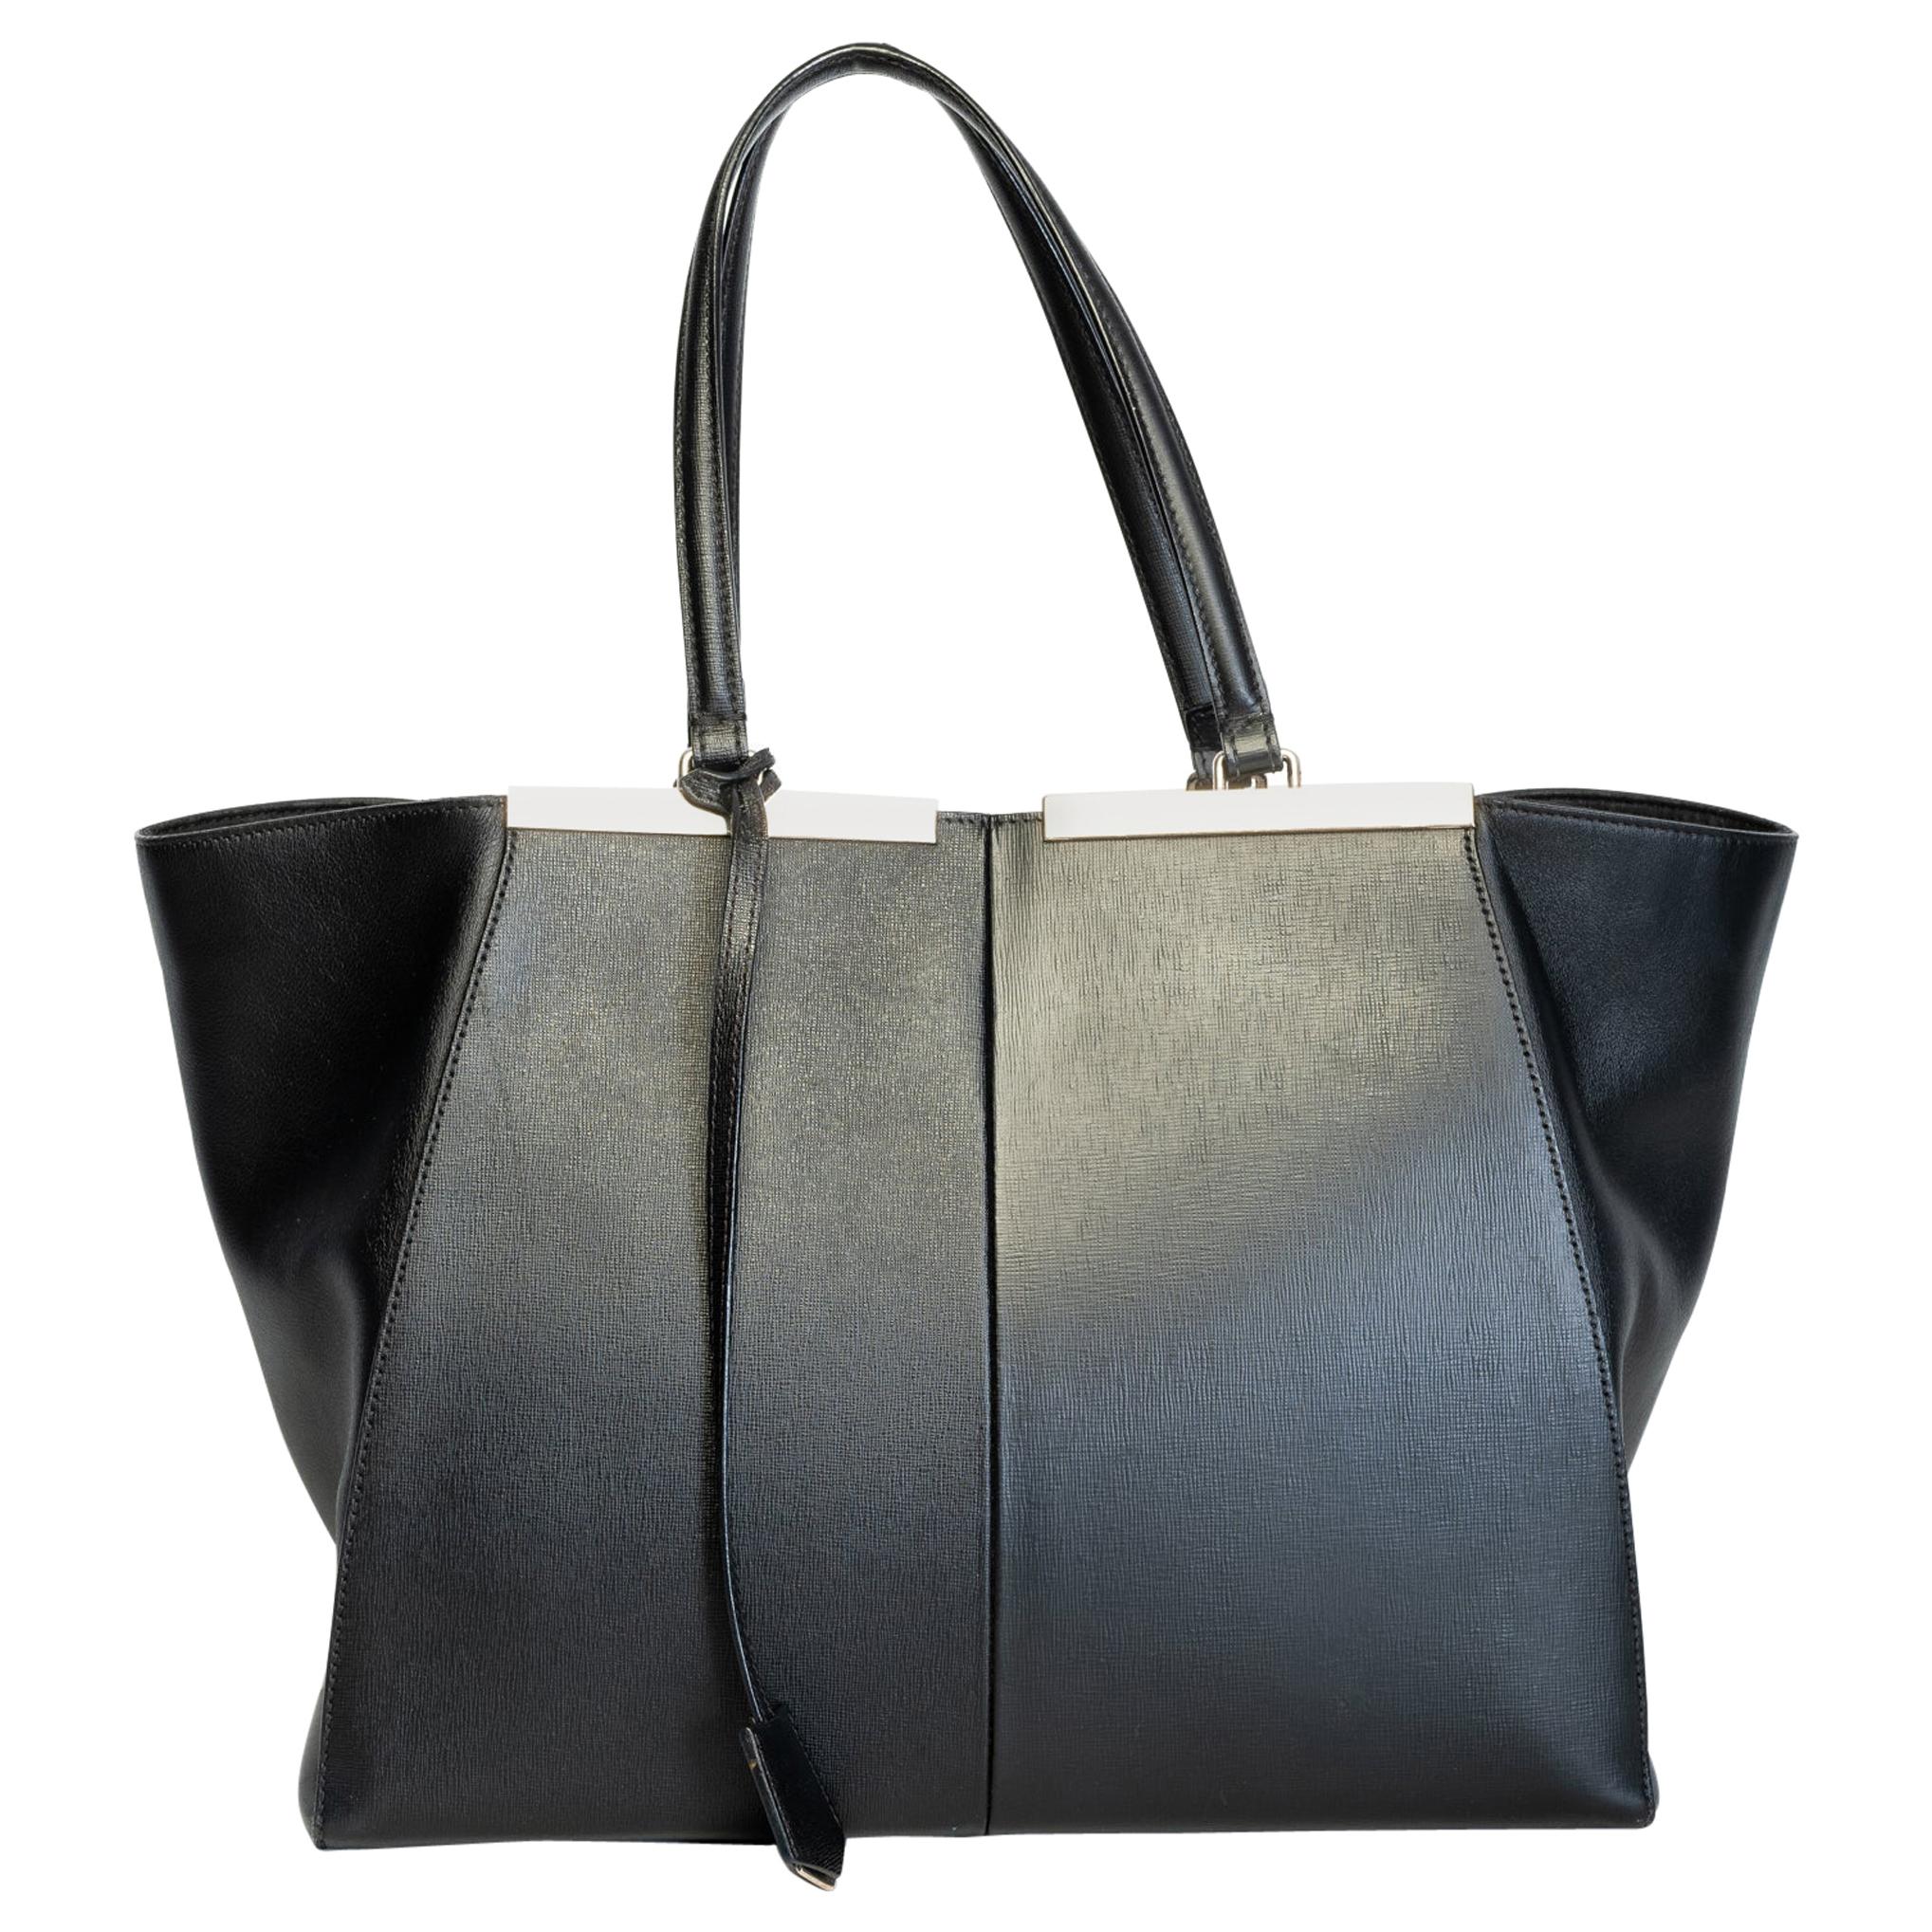 Fendi Classic Black 3Jours Leather Tote Bag